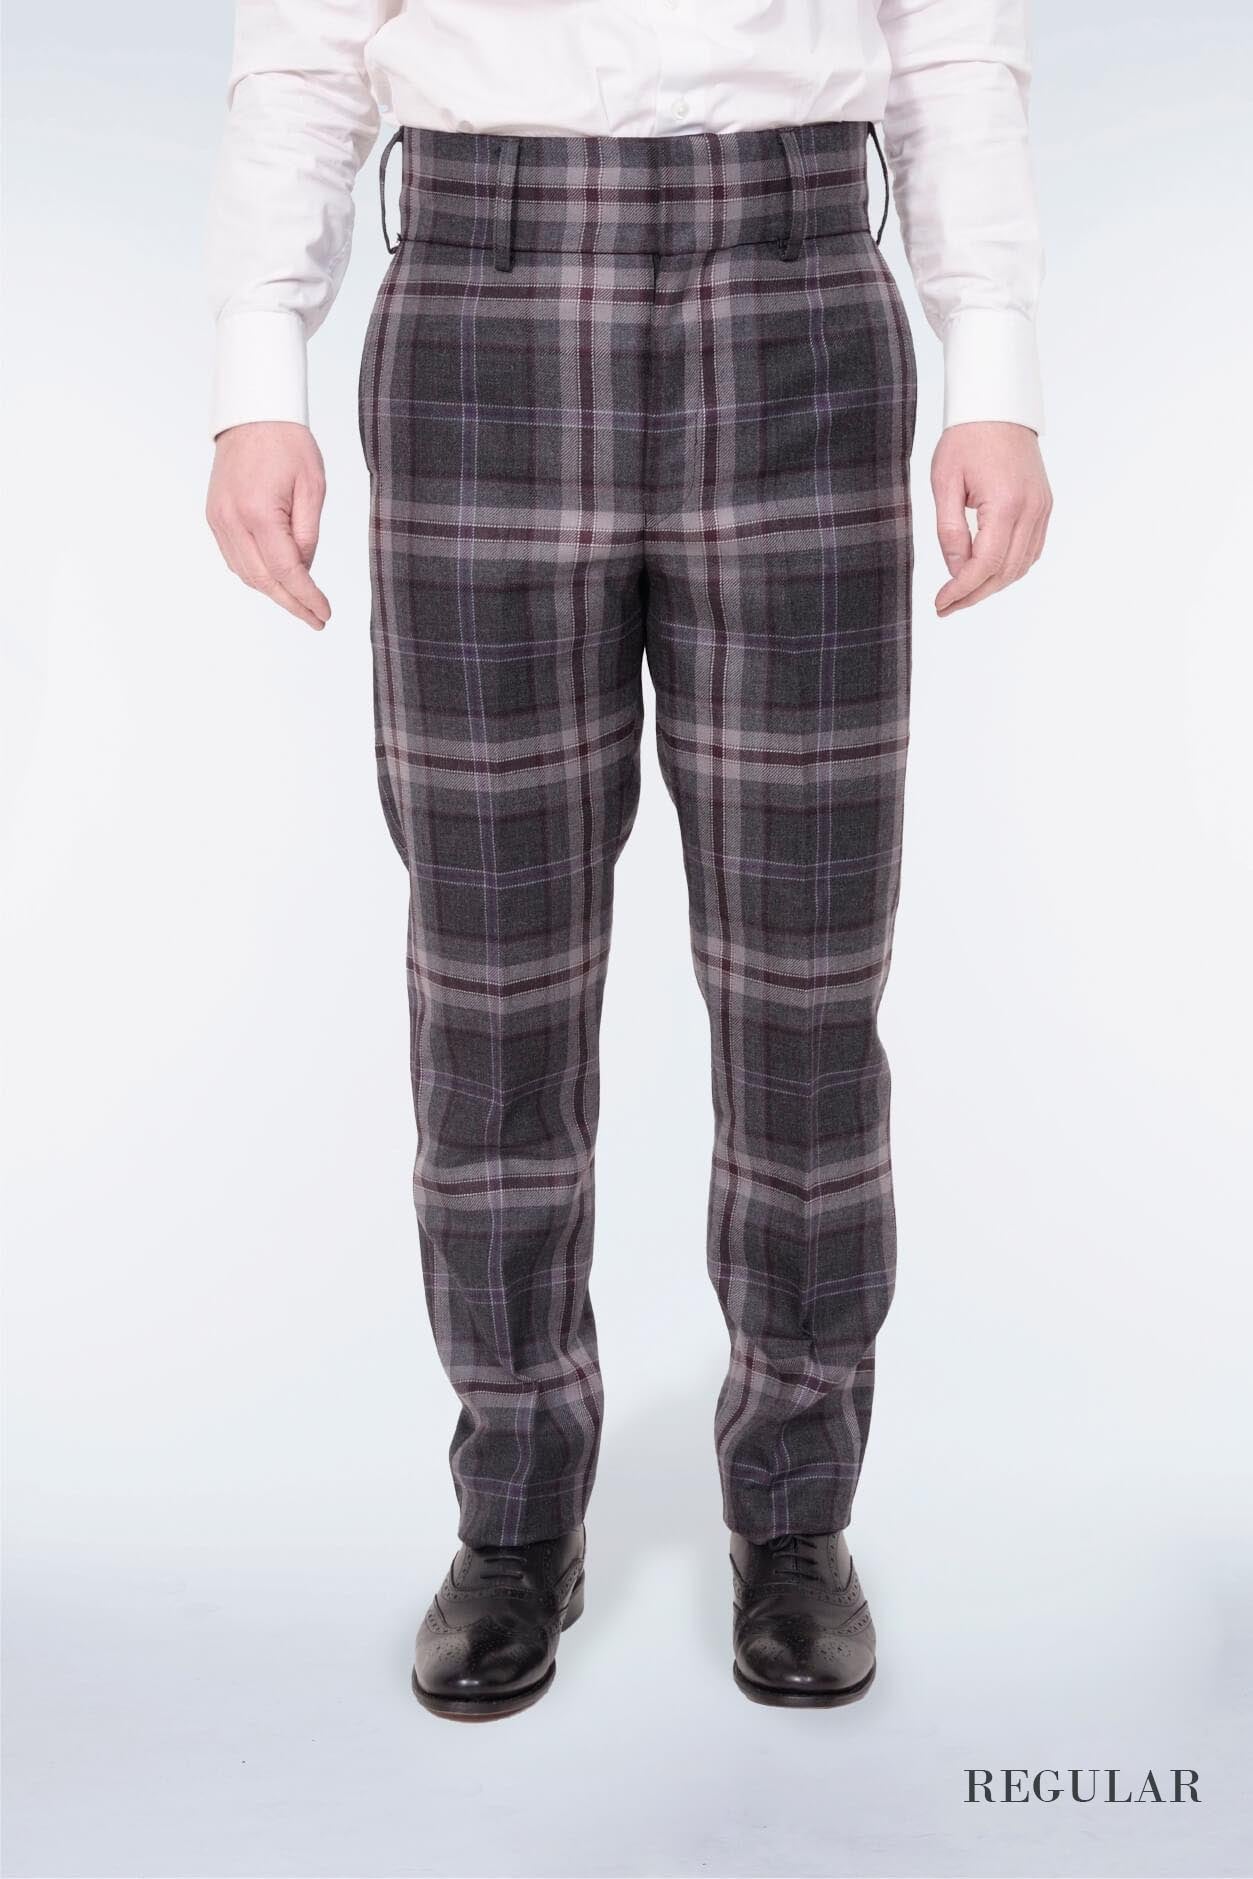 Tartan Trousers and Trews - Tartan Pants, Plaid Golf Pants, Scottish Pants